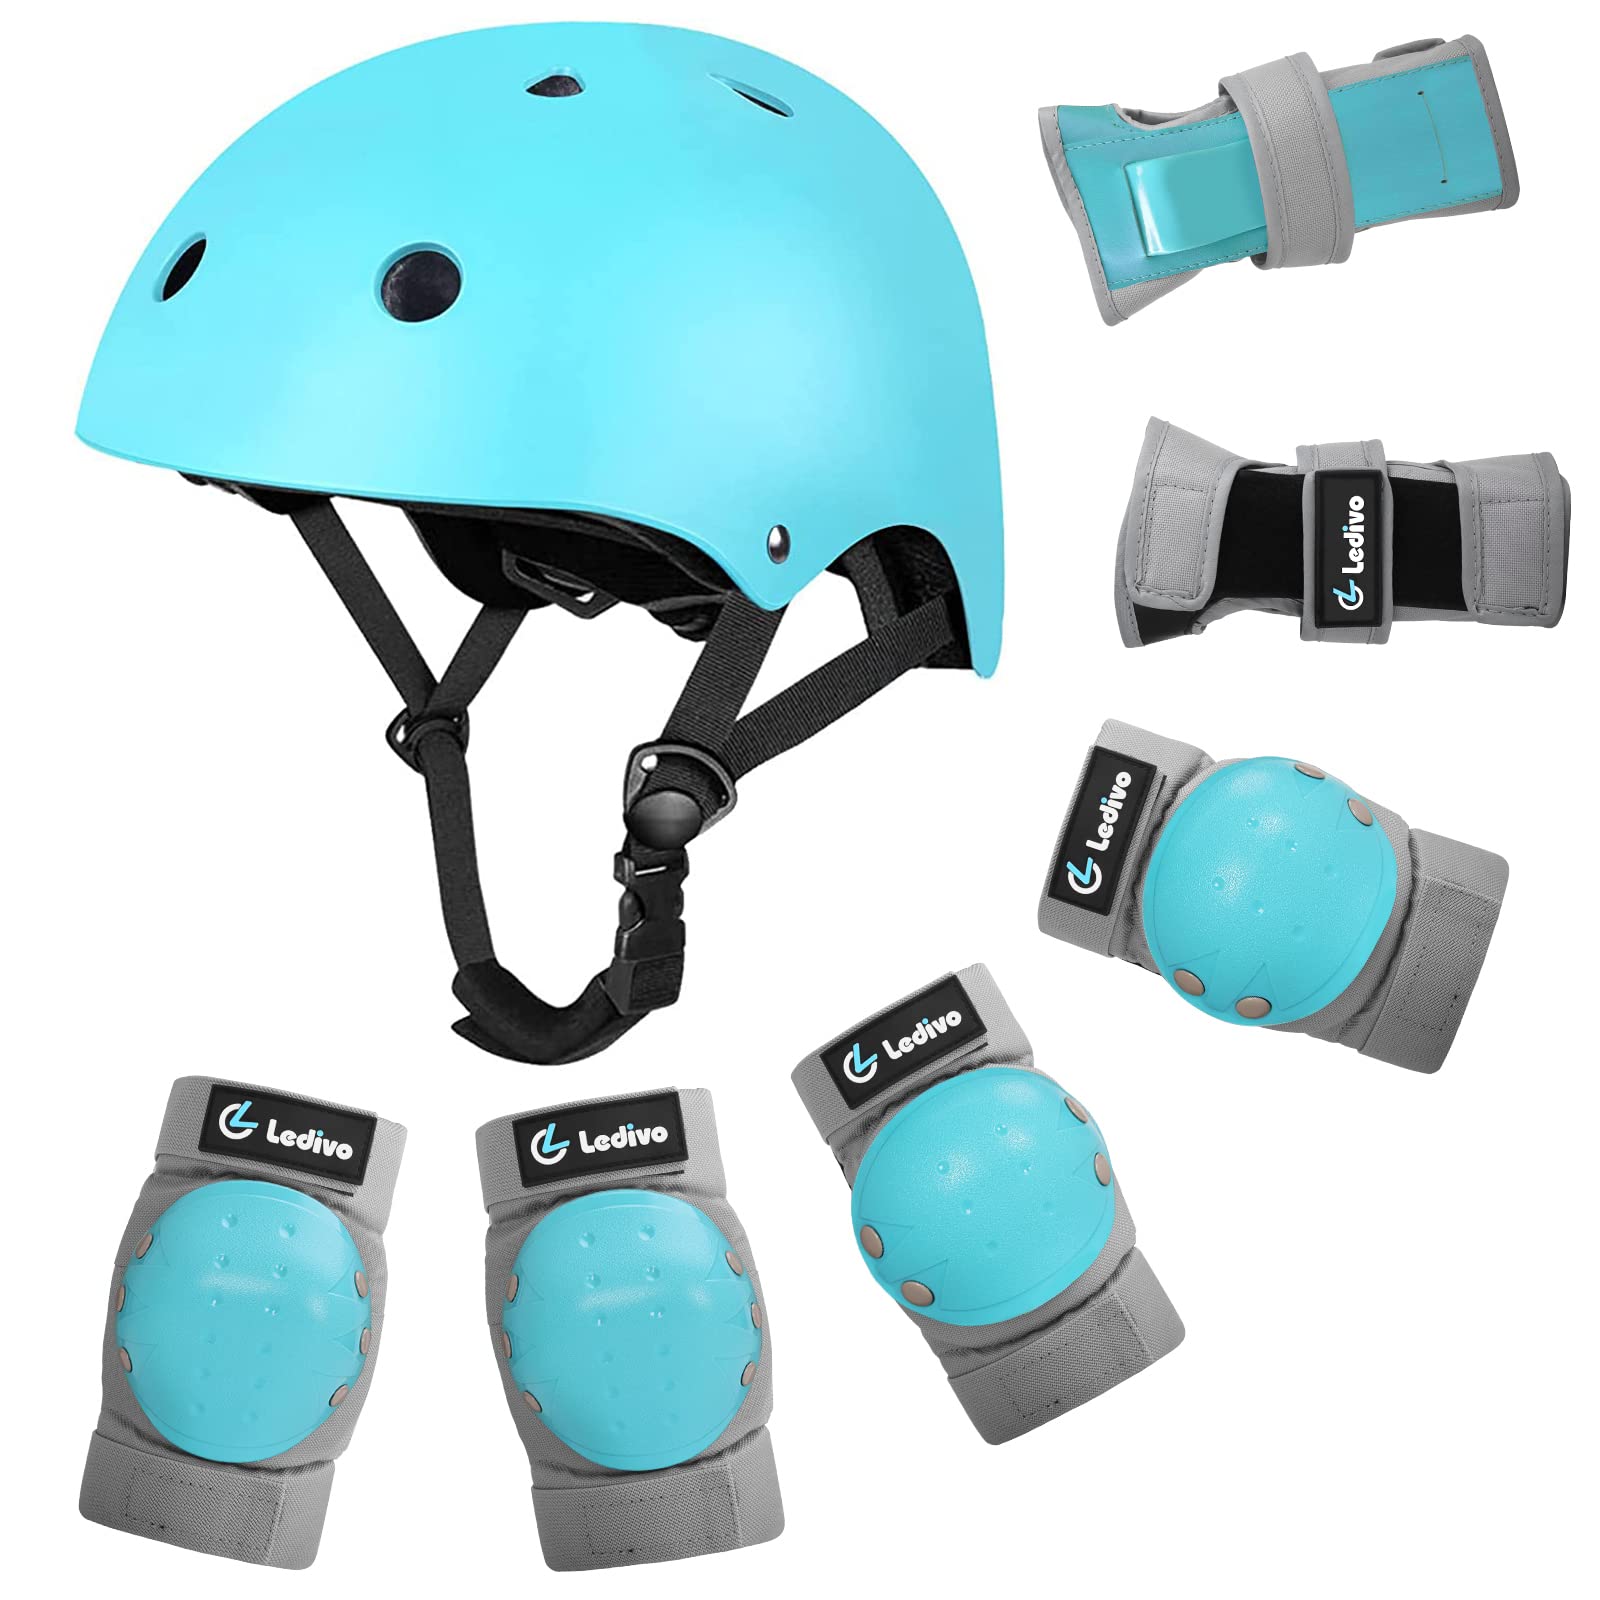 Kids Helmet Adjustable with Sports Protective Gear Set Knee Elbow